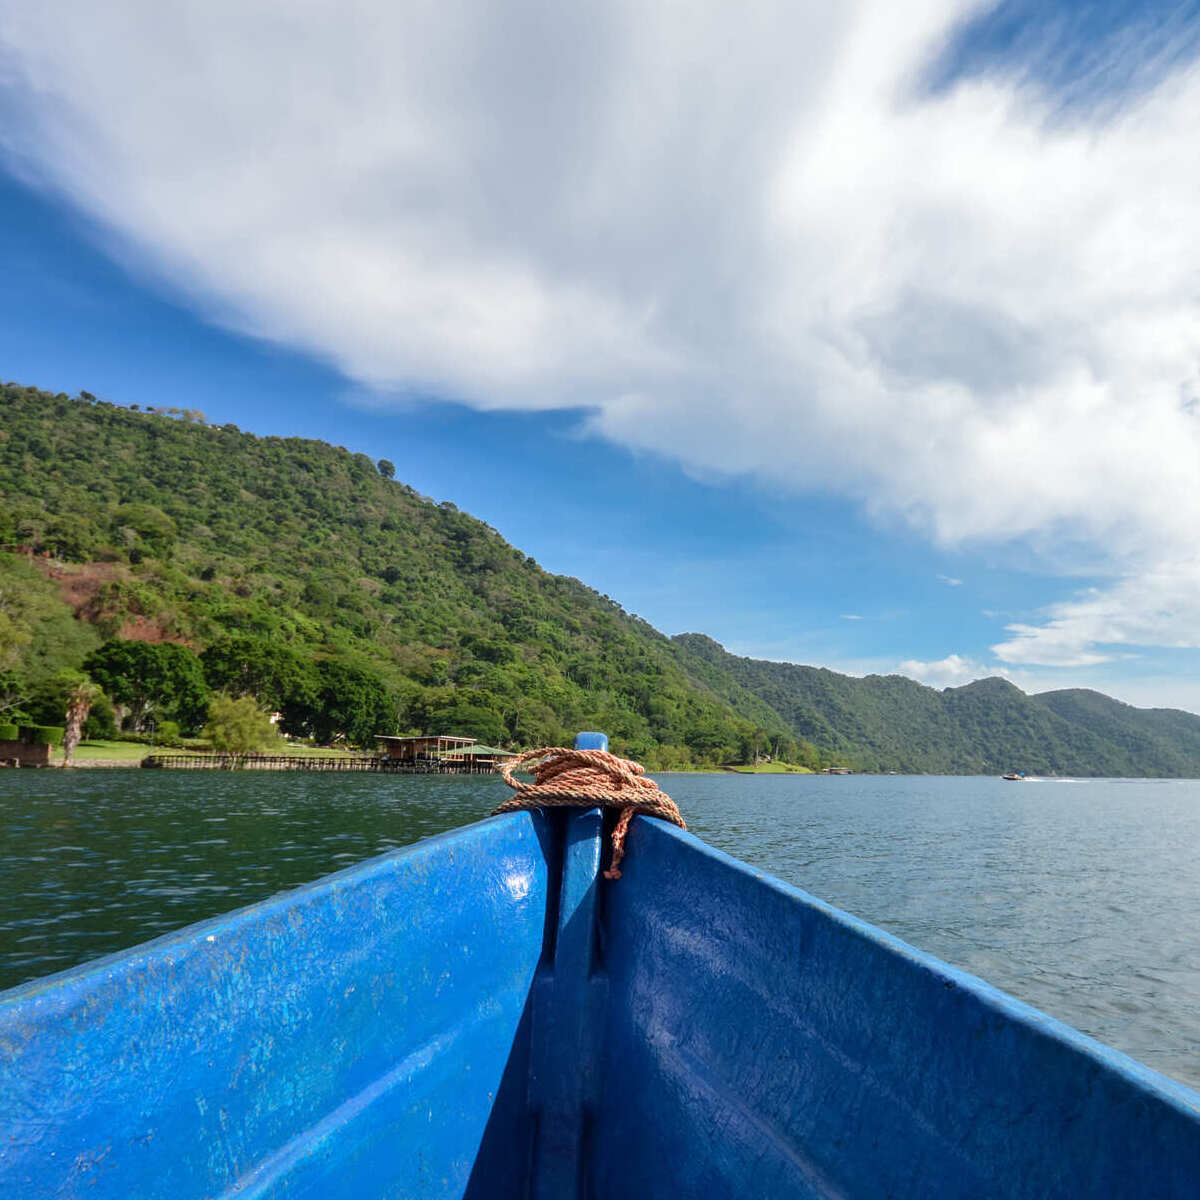 Blue Boat In A Lake In El Salvador, Latin America.jpg